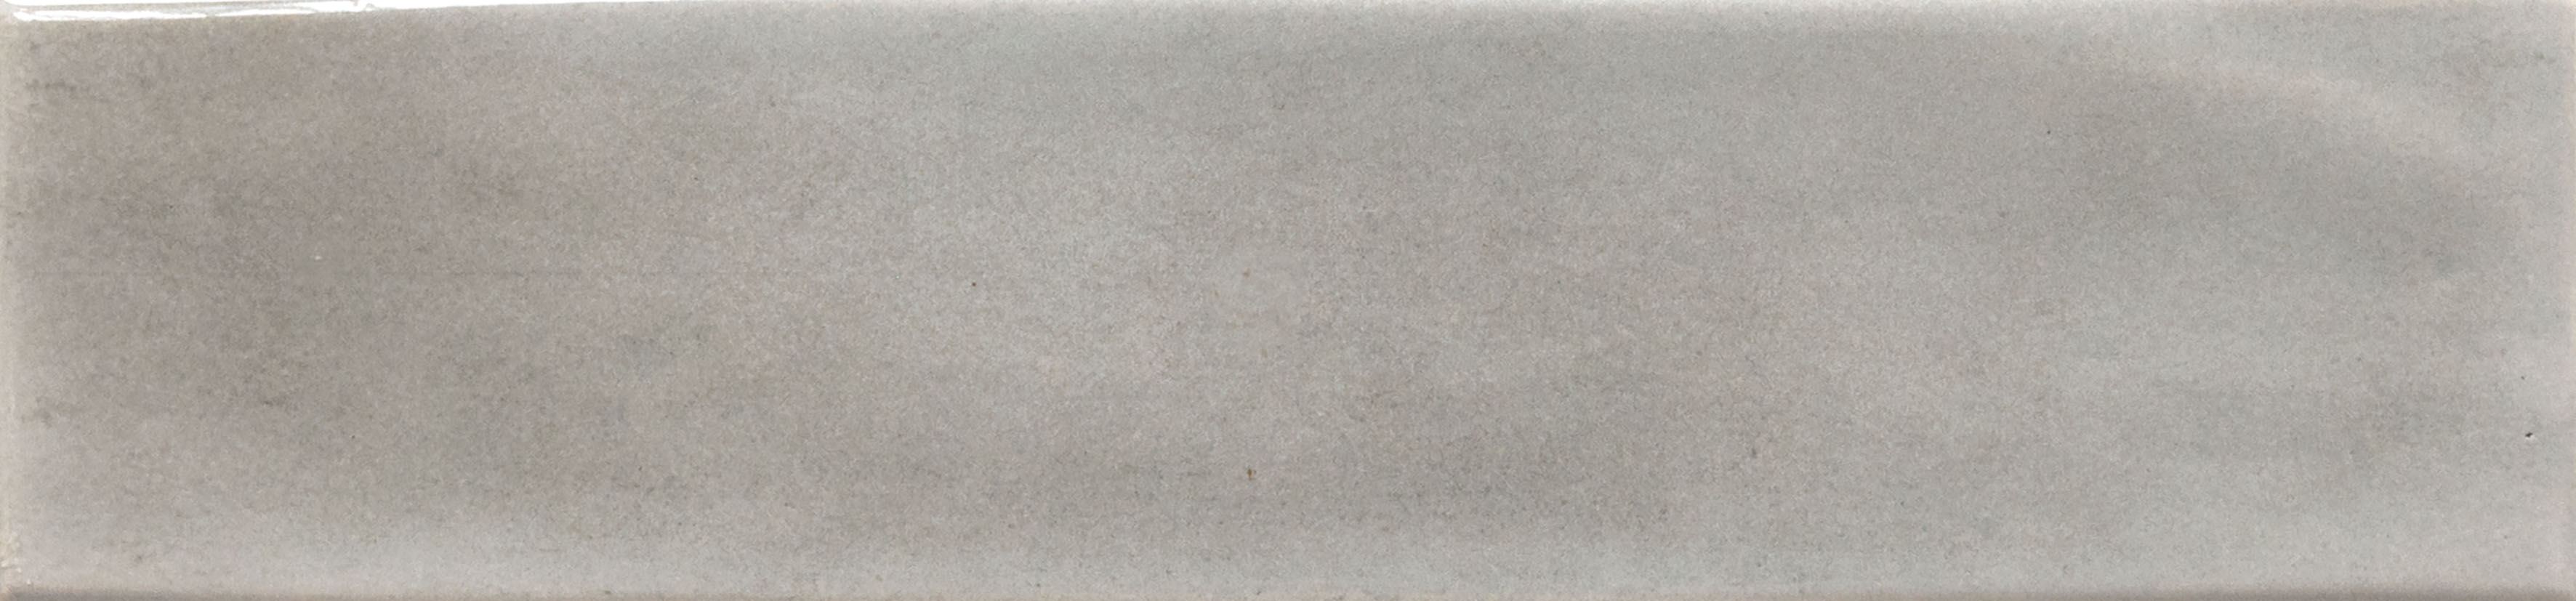 Catalea Gres Nyborg Metrofliese Grau glänzend 7,5x30 cm  